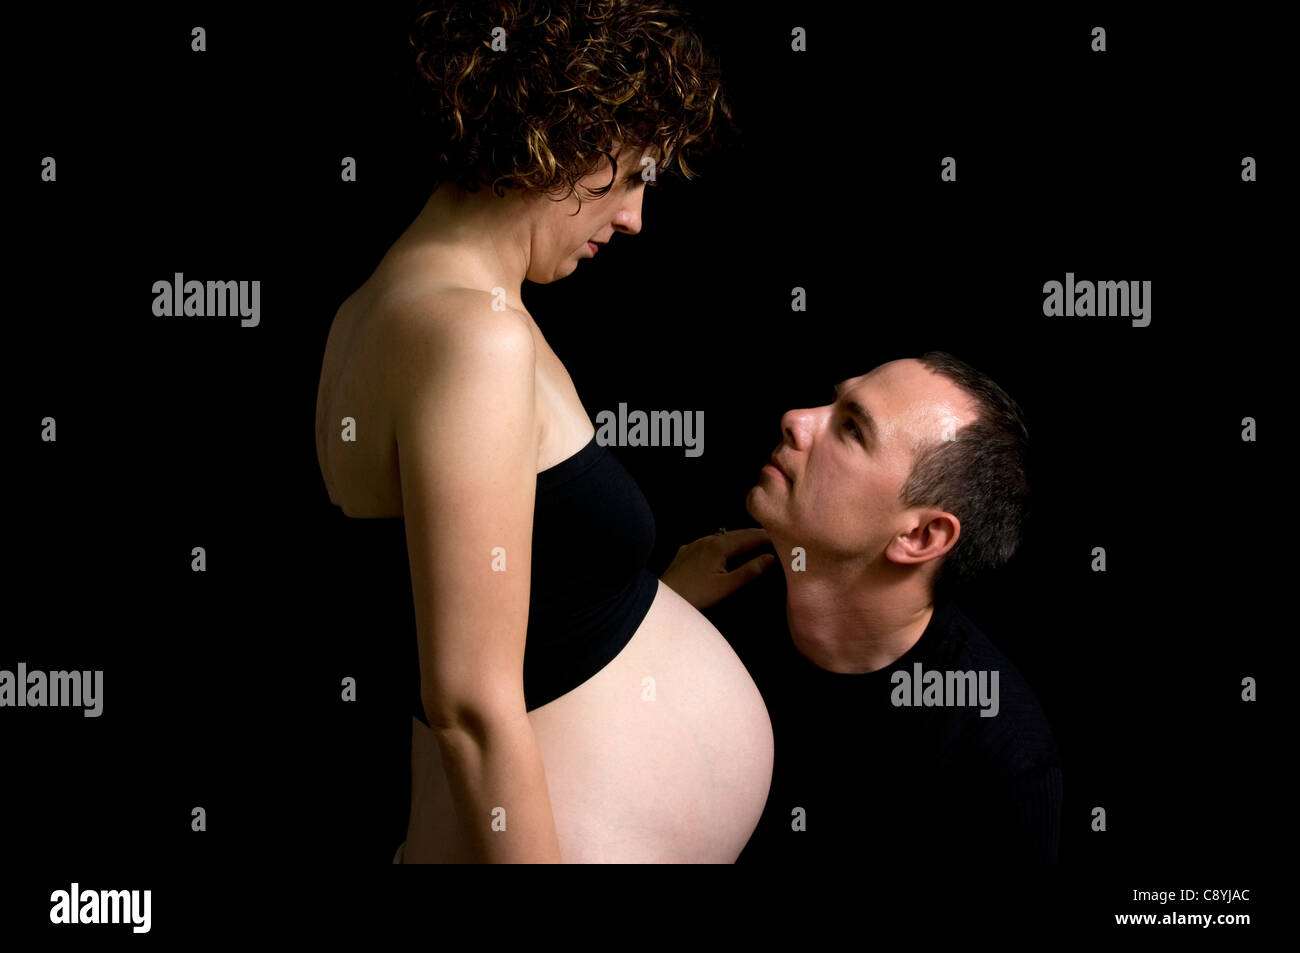 Una immagine di maternità di una coppia di sposi Foto Stock